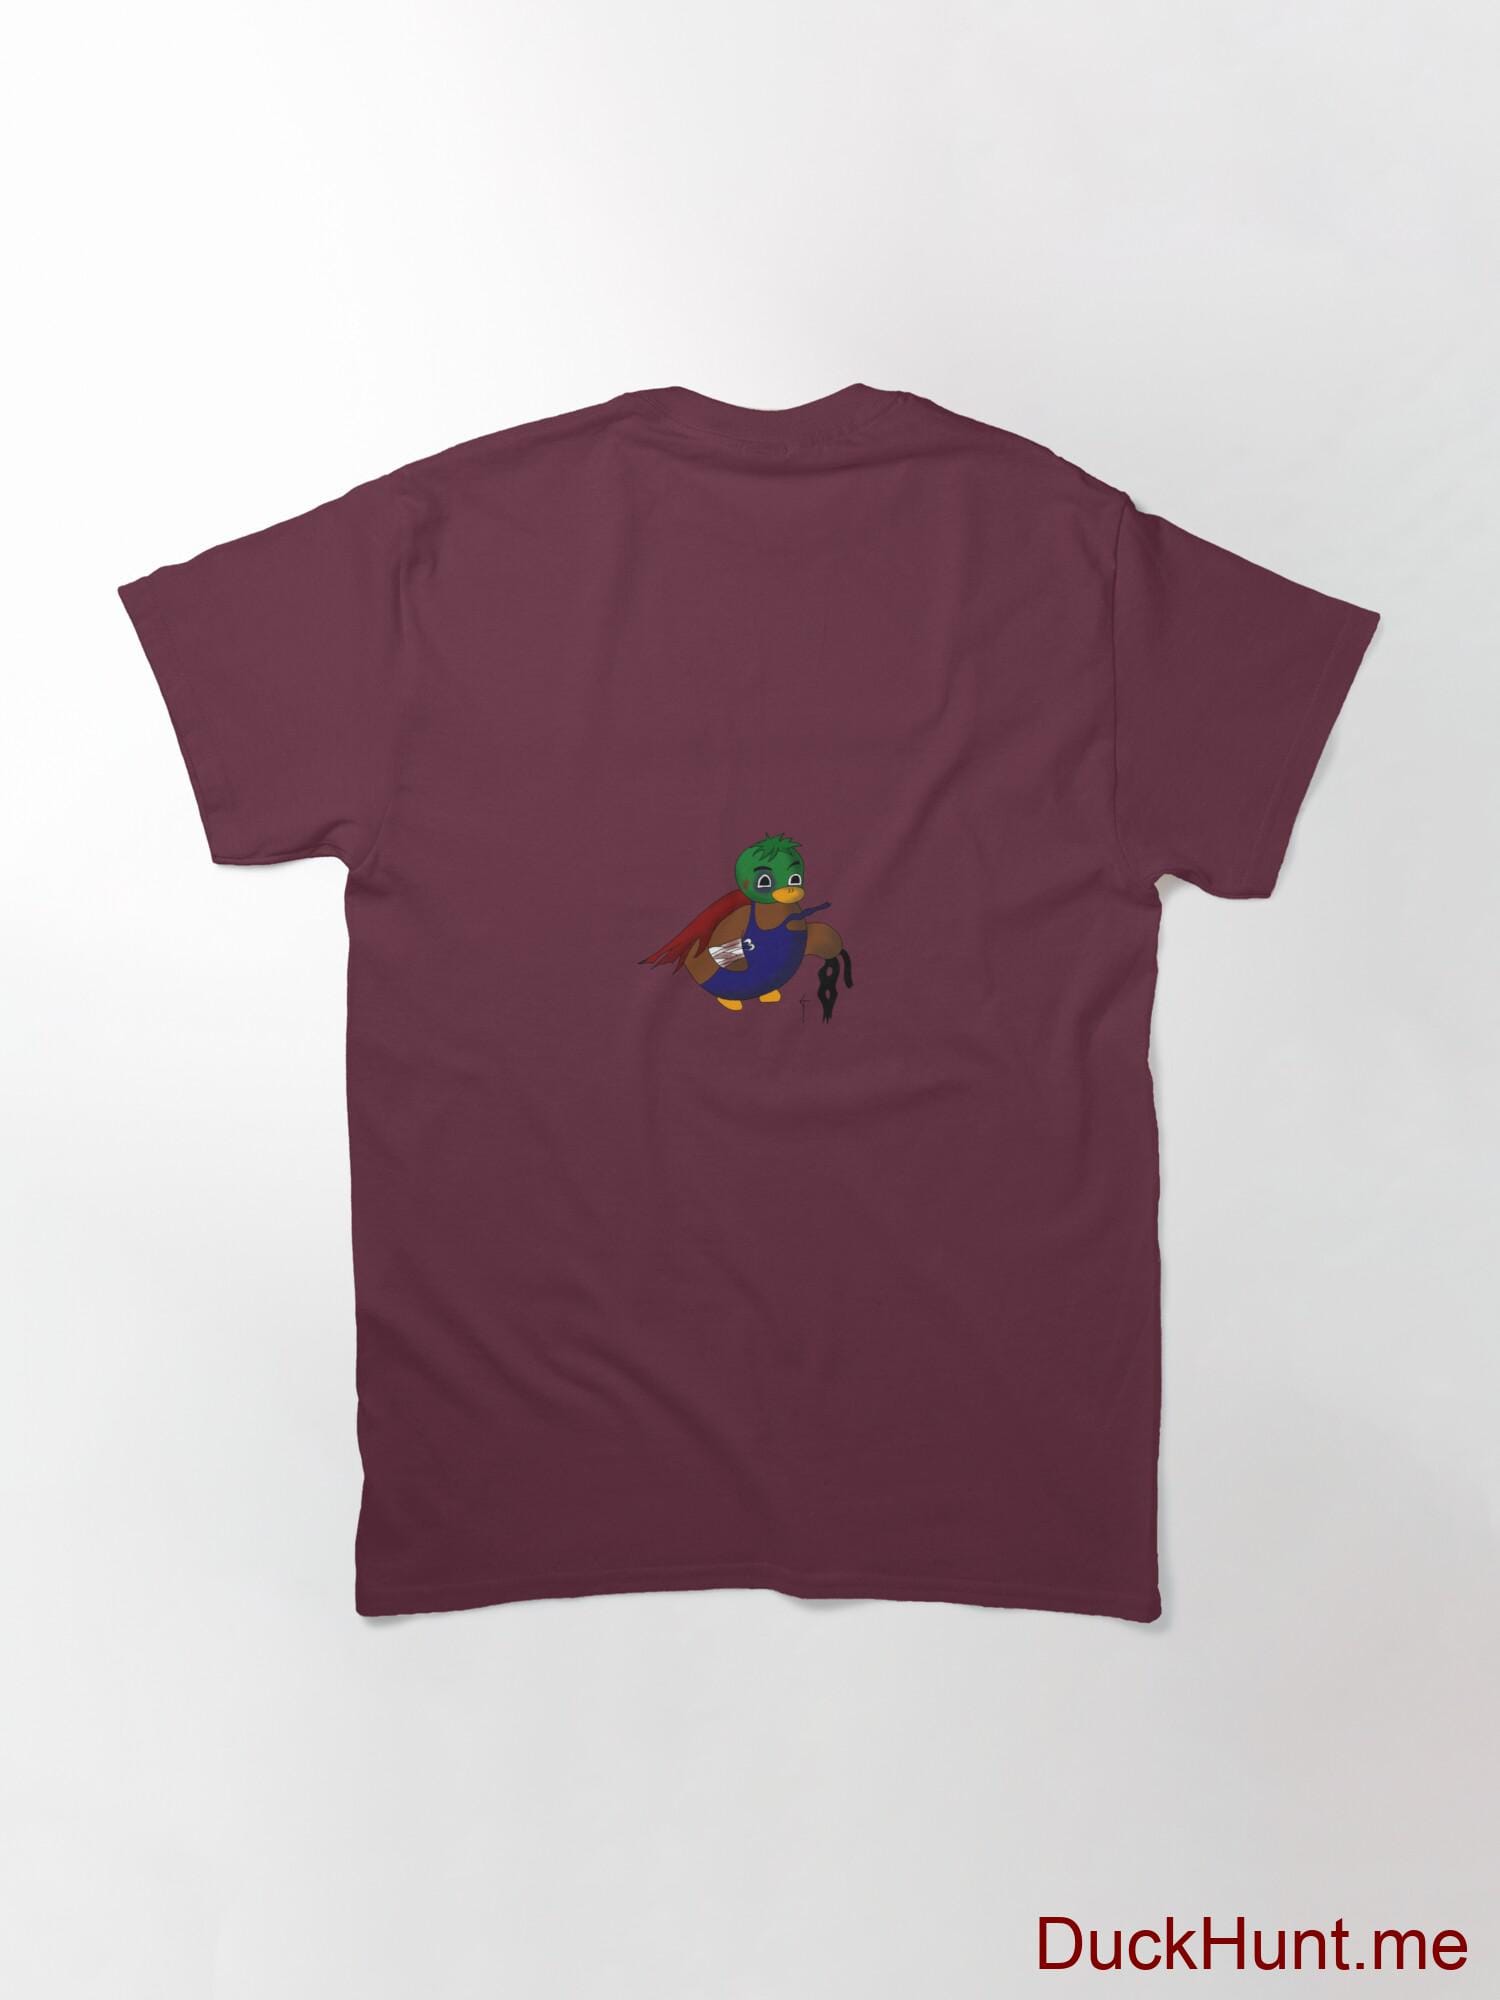 Dead DuckHunt Boss (smokeless) Dark Red Classic T-Shirt (Back printed) alternative image 1